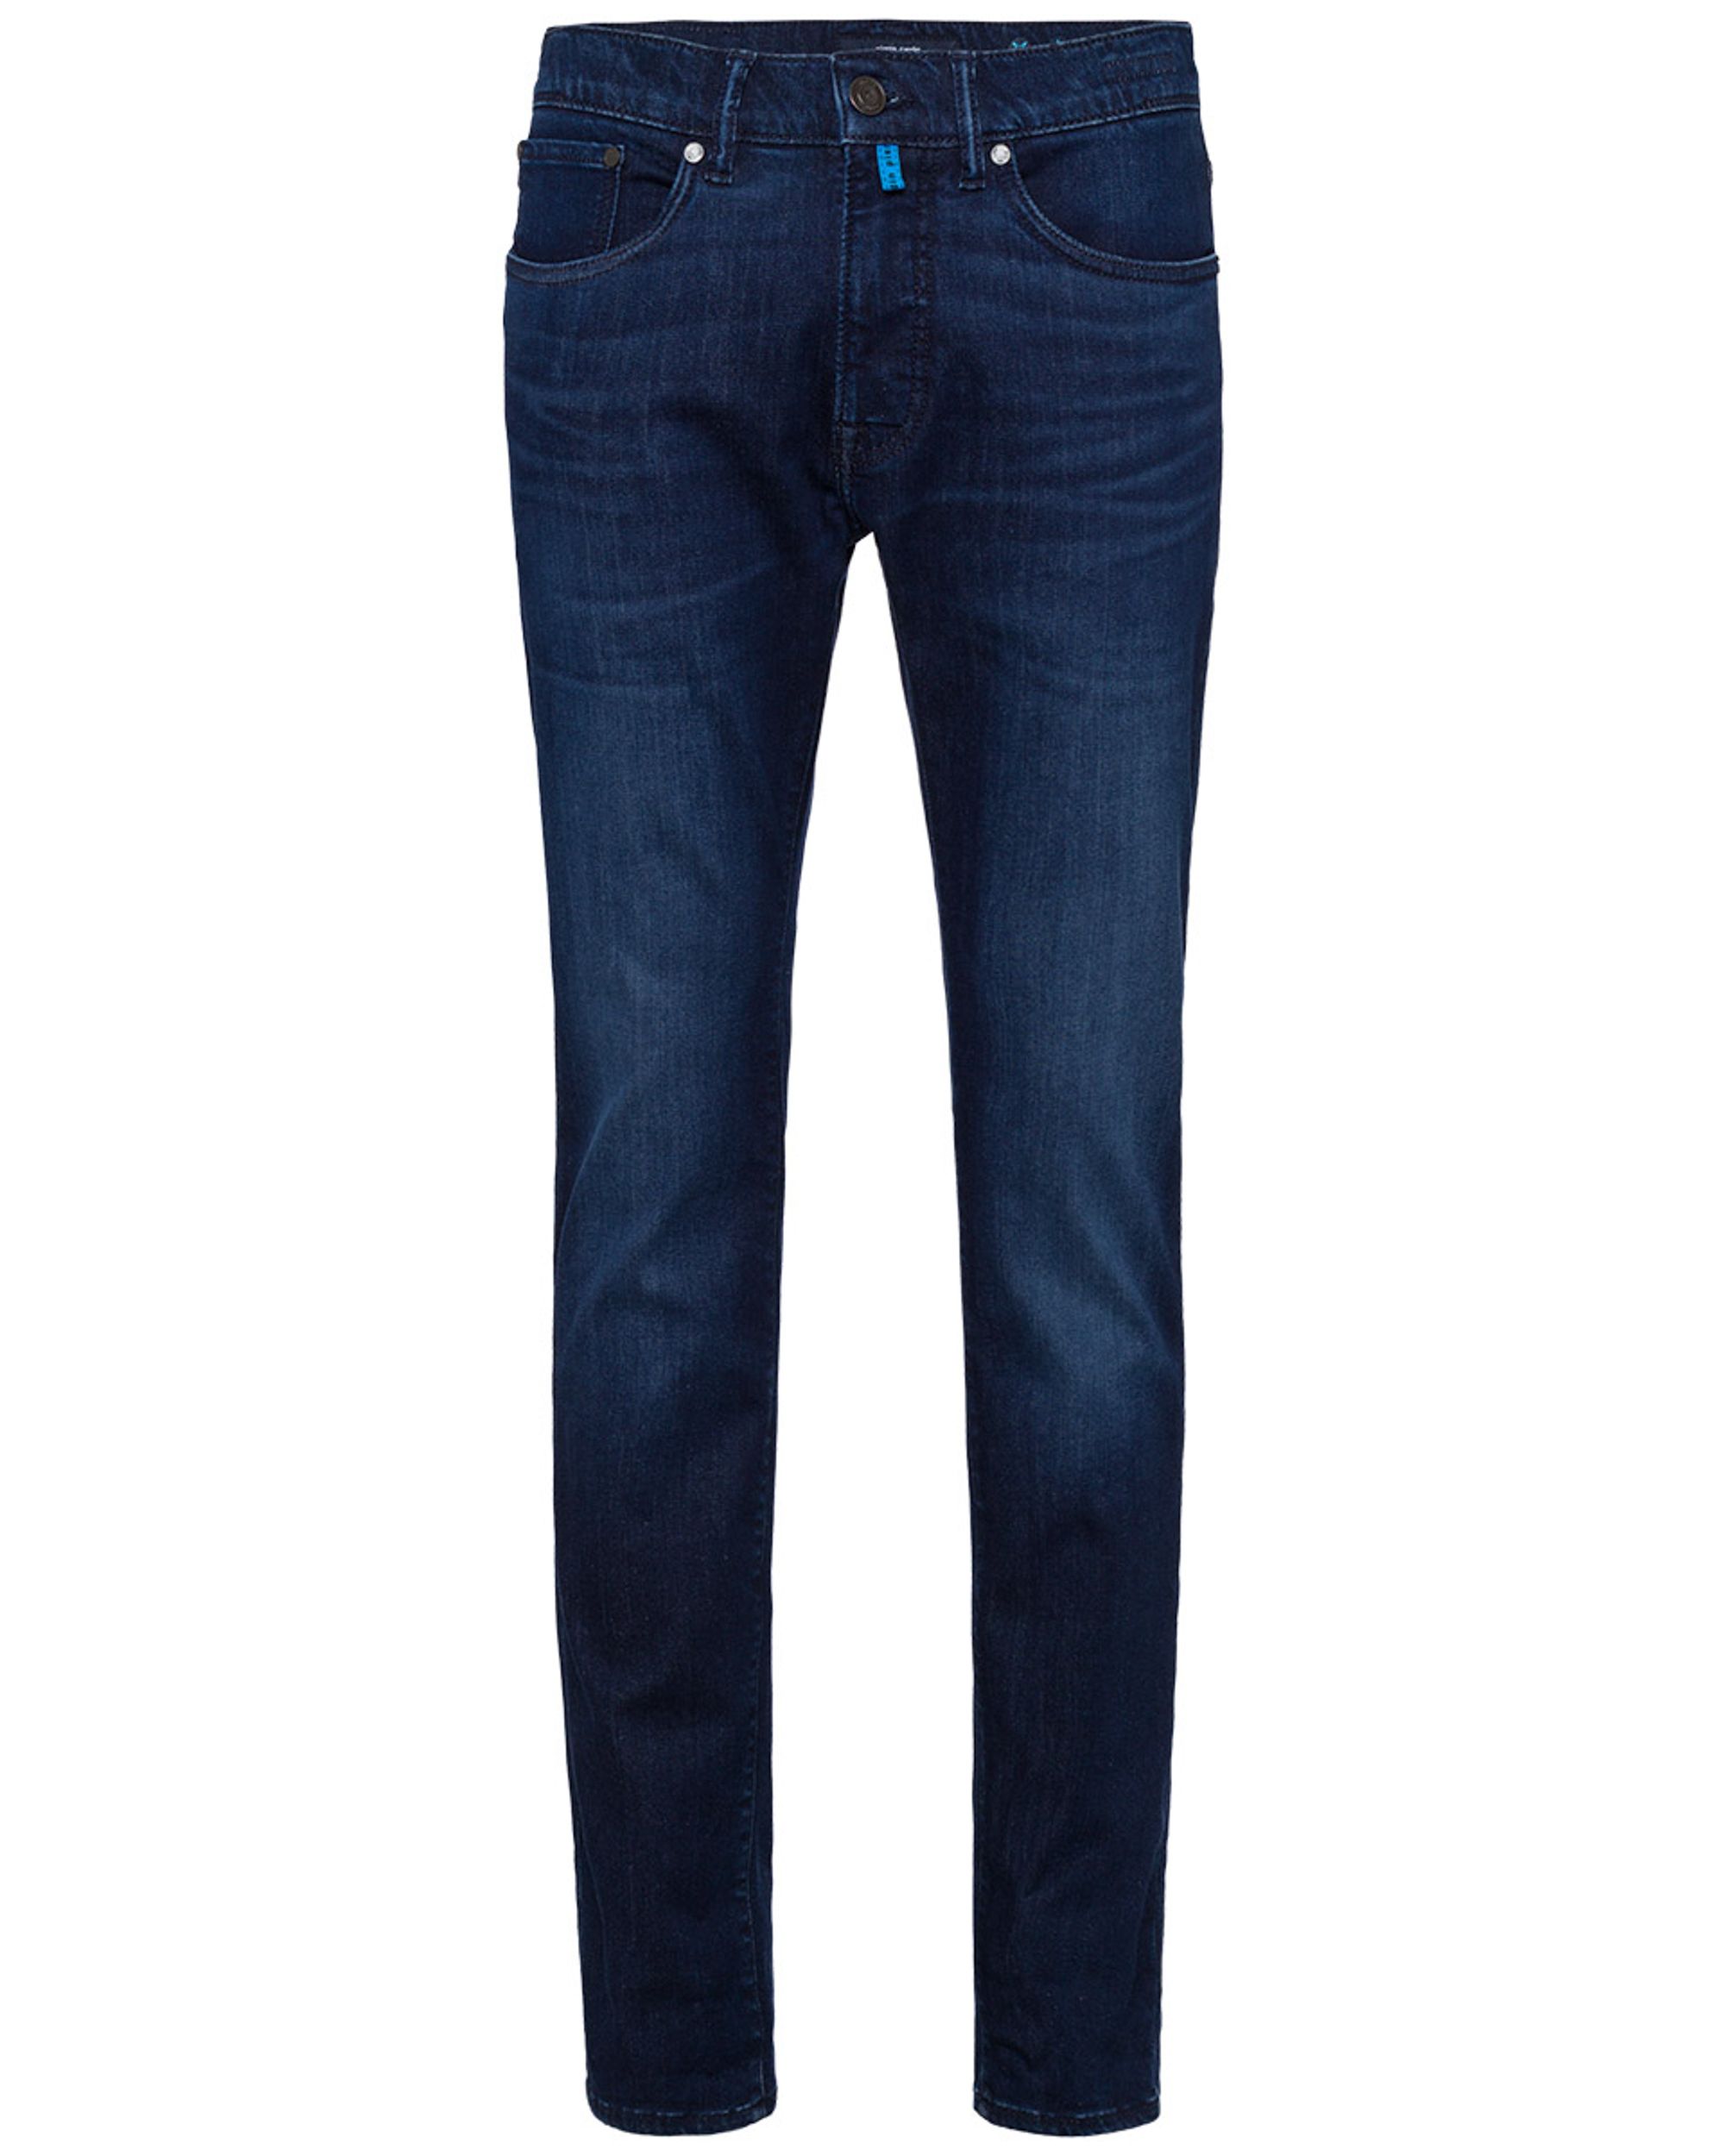 Pierre Cardin Antibes Jeans Blauw 082056-001-33/32